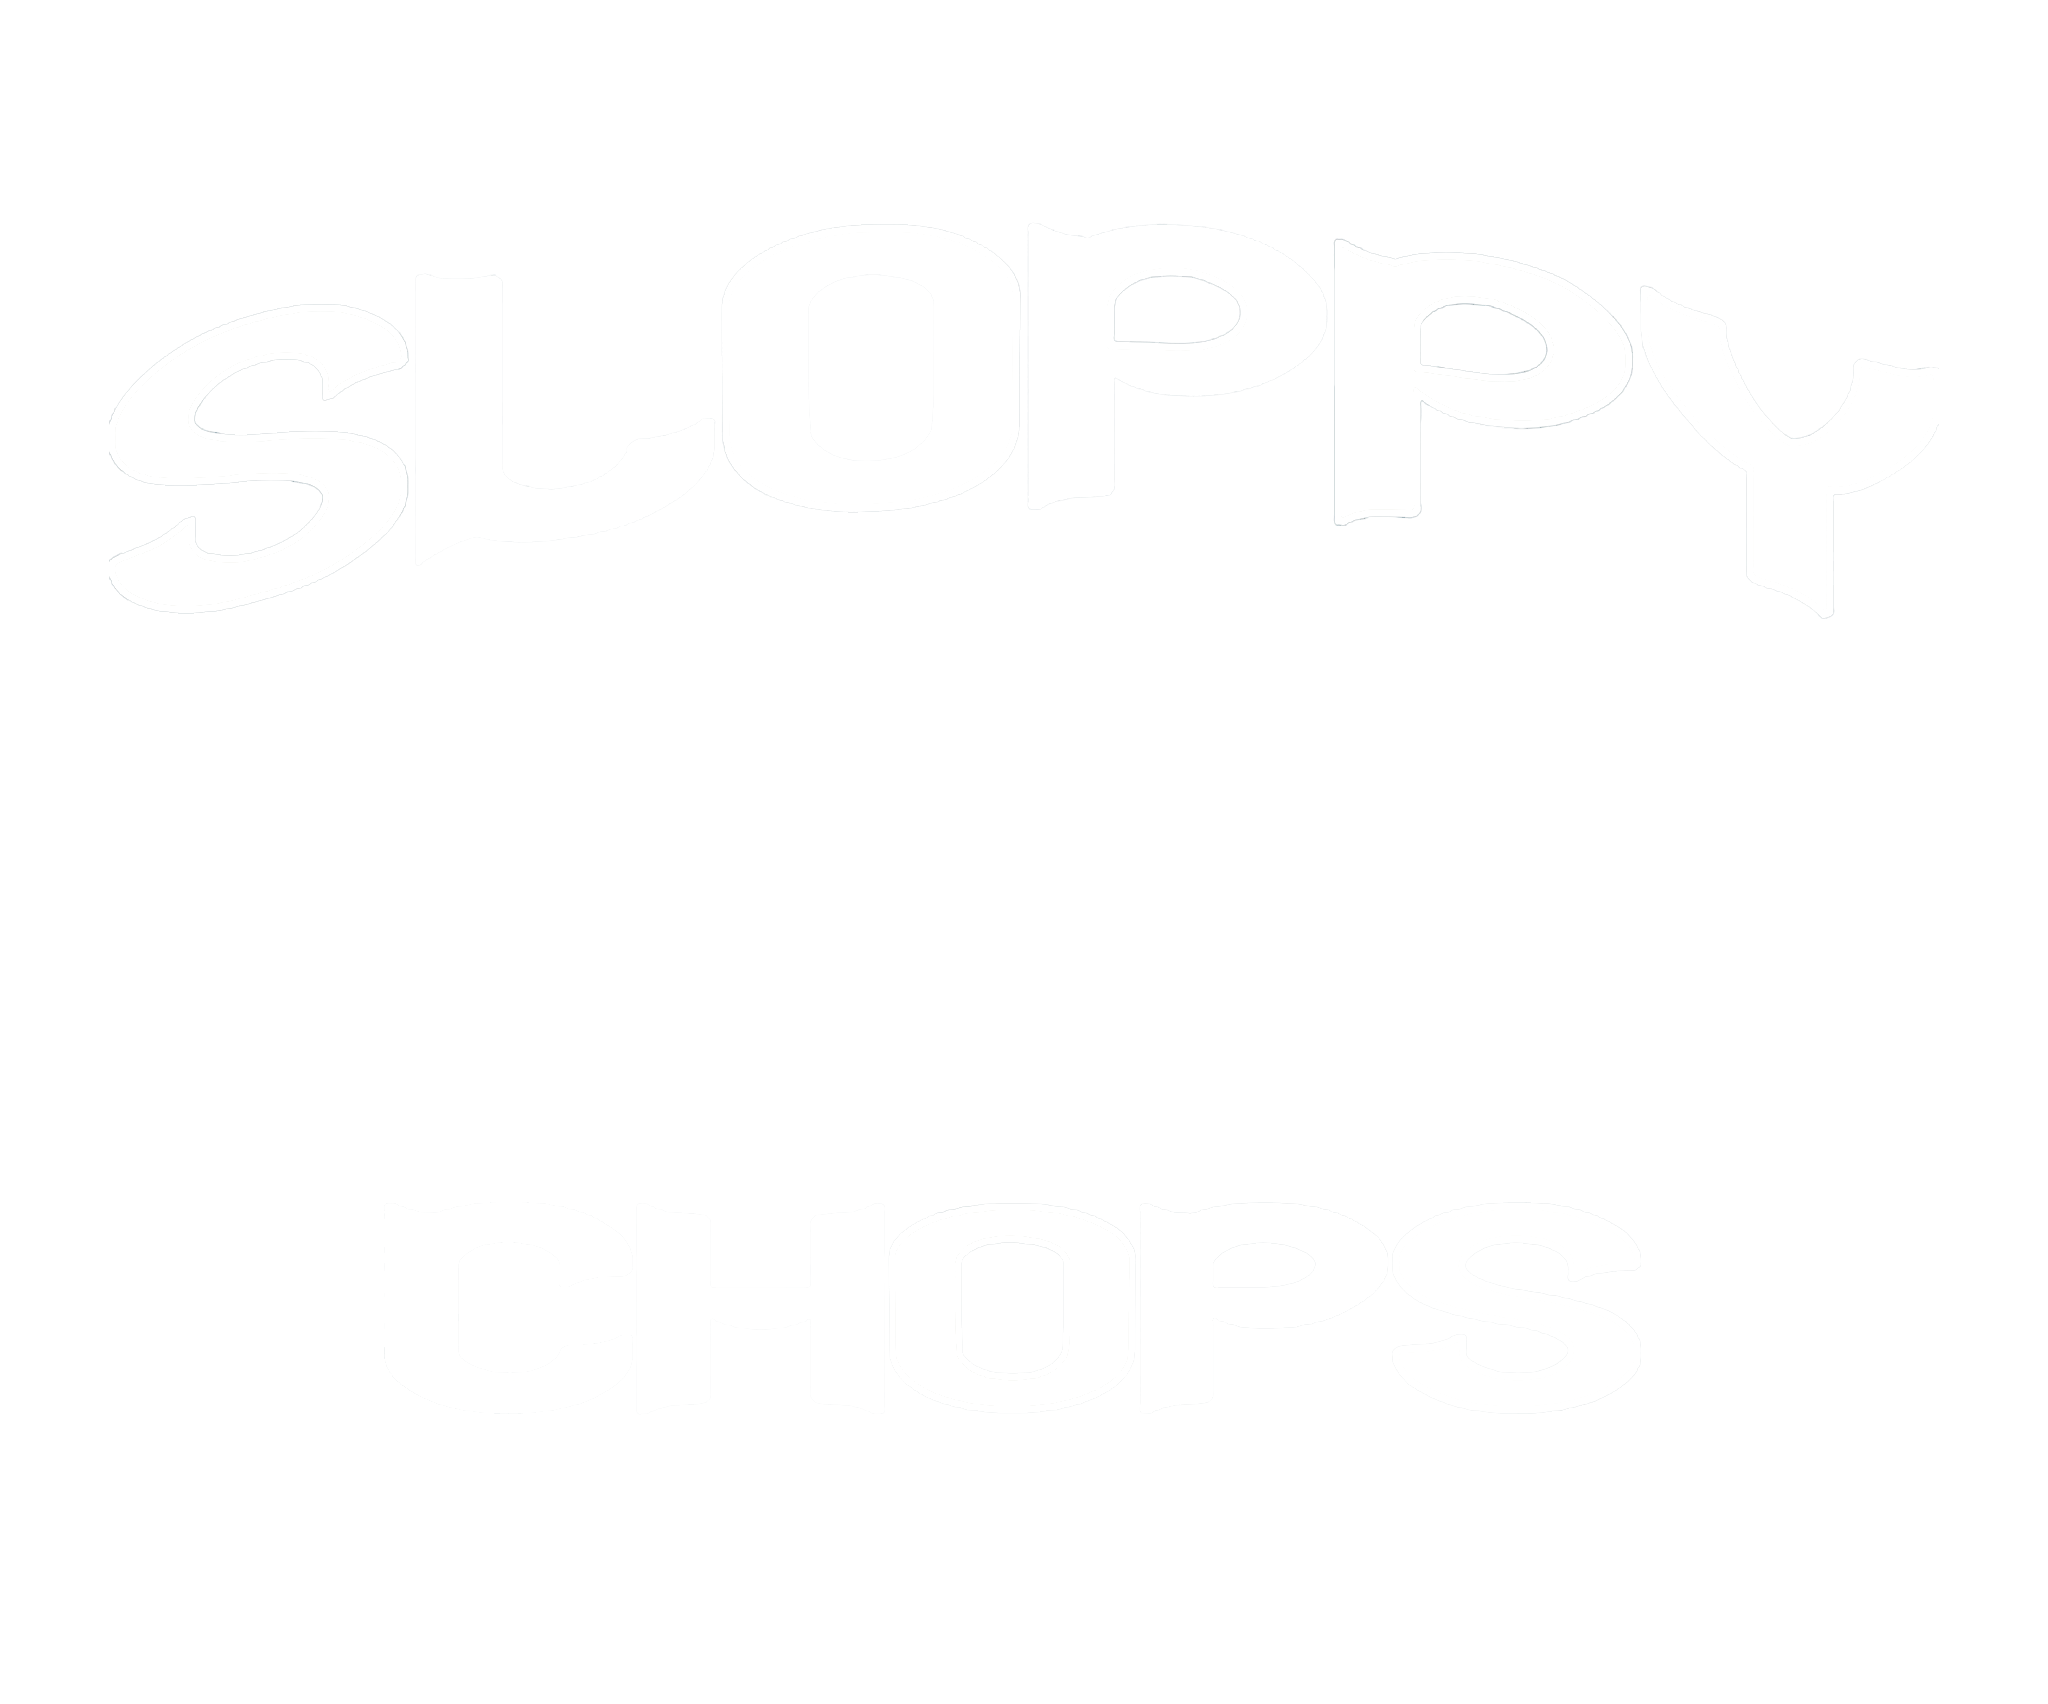 Sloppy Chops logo top